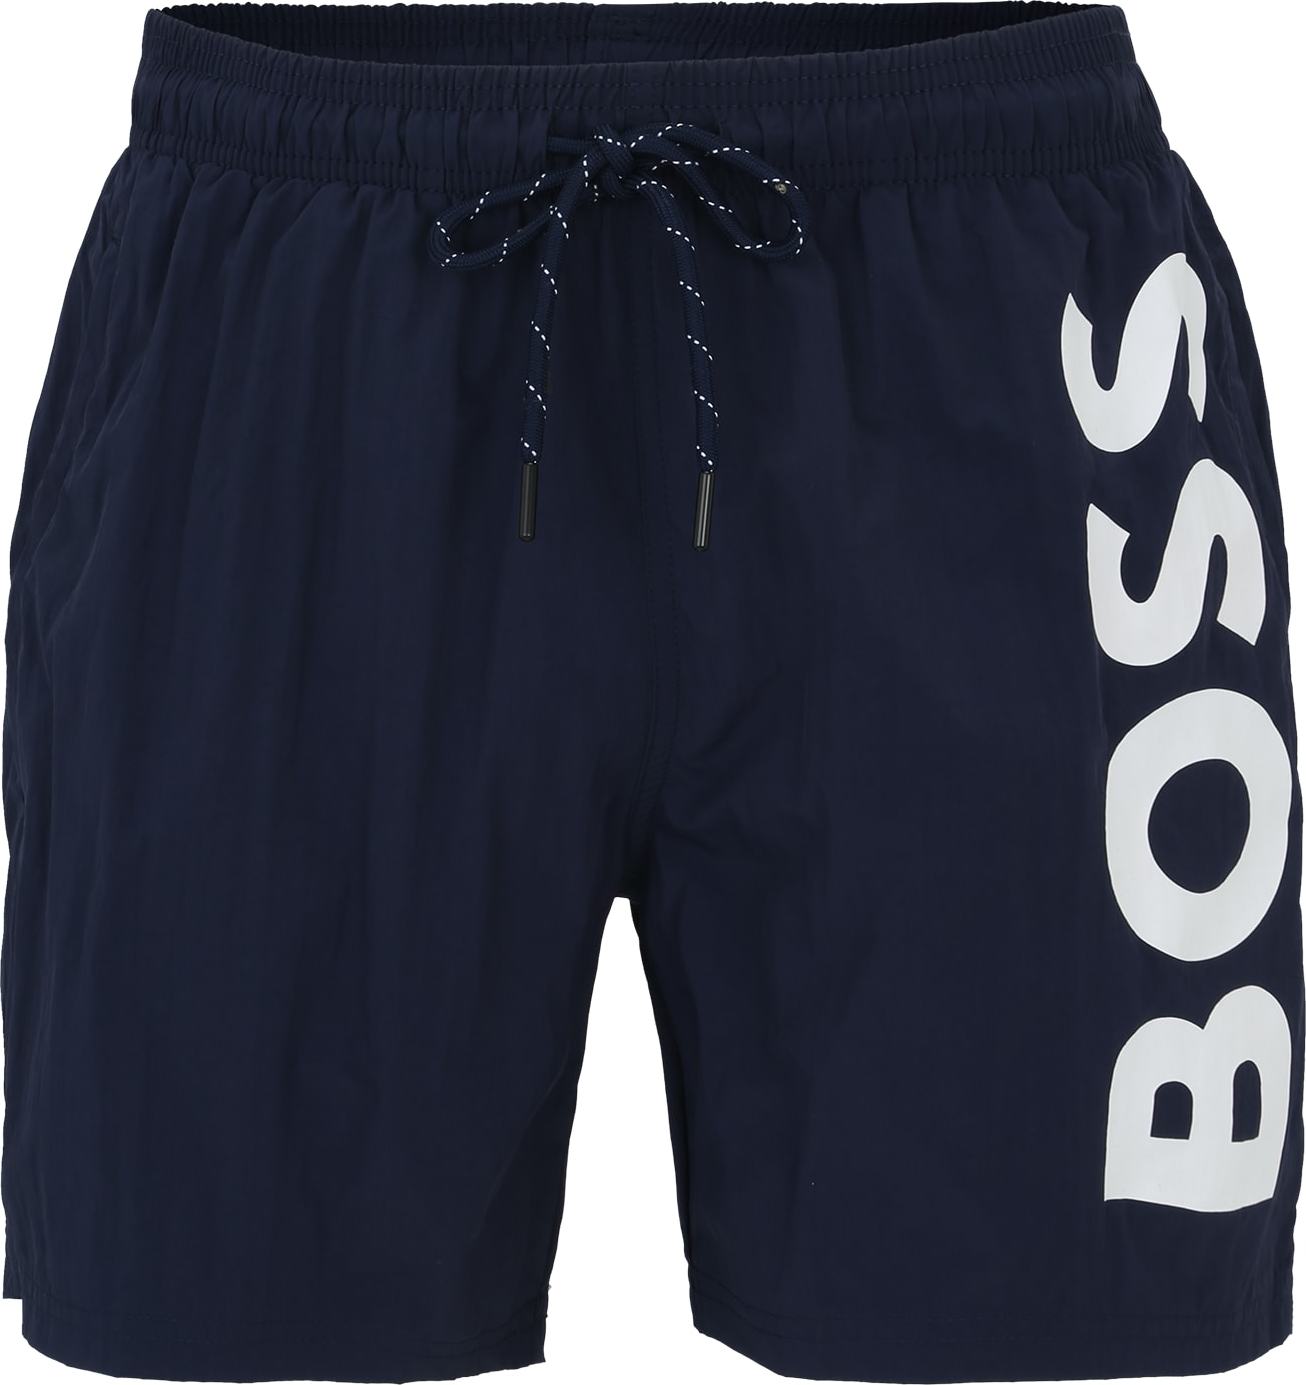 BOSS Black Plavecké šortky 'Octopus' marine modrá / bílá